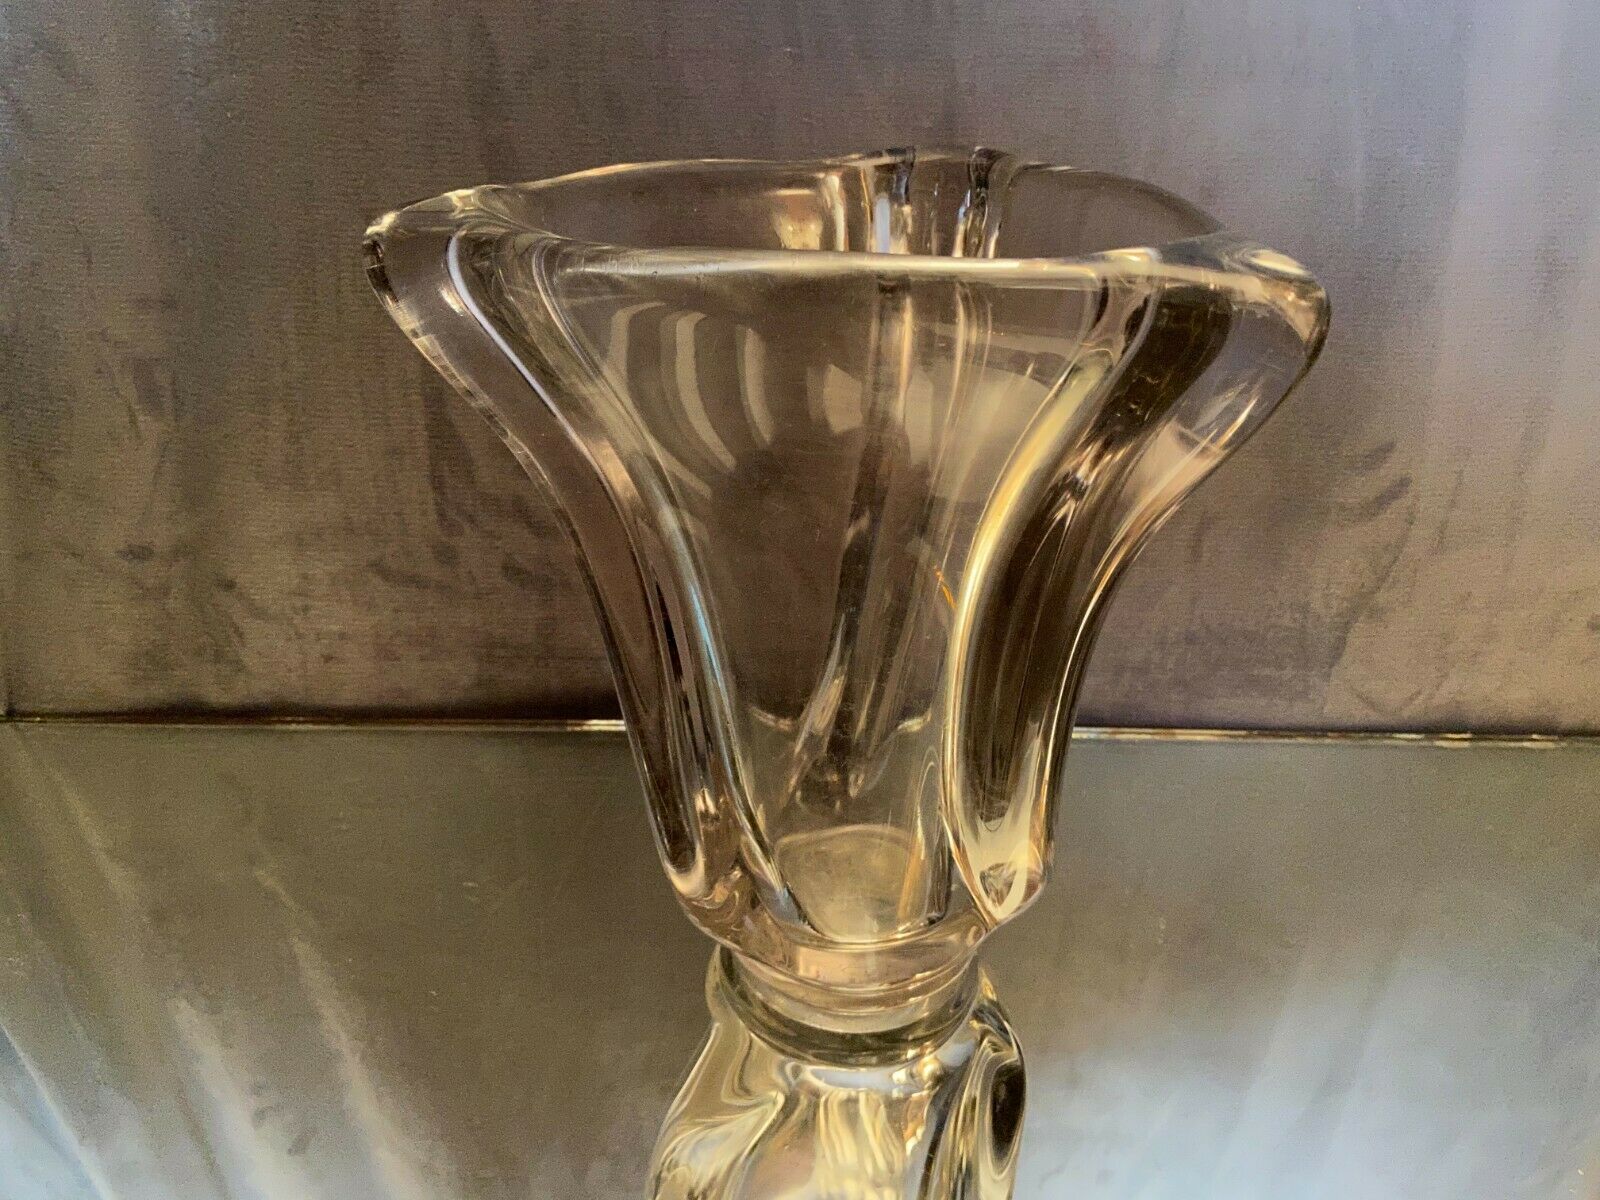 Lourd vase design en cristal de type Daum 